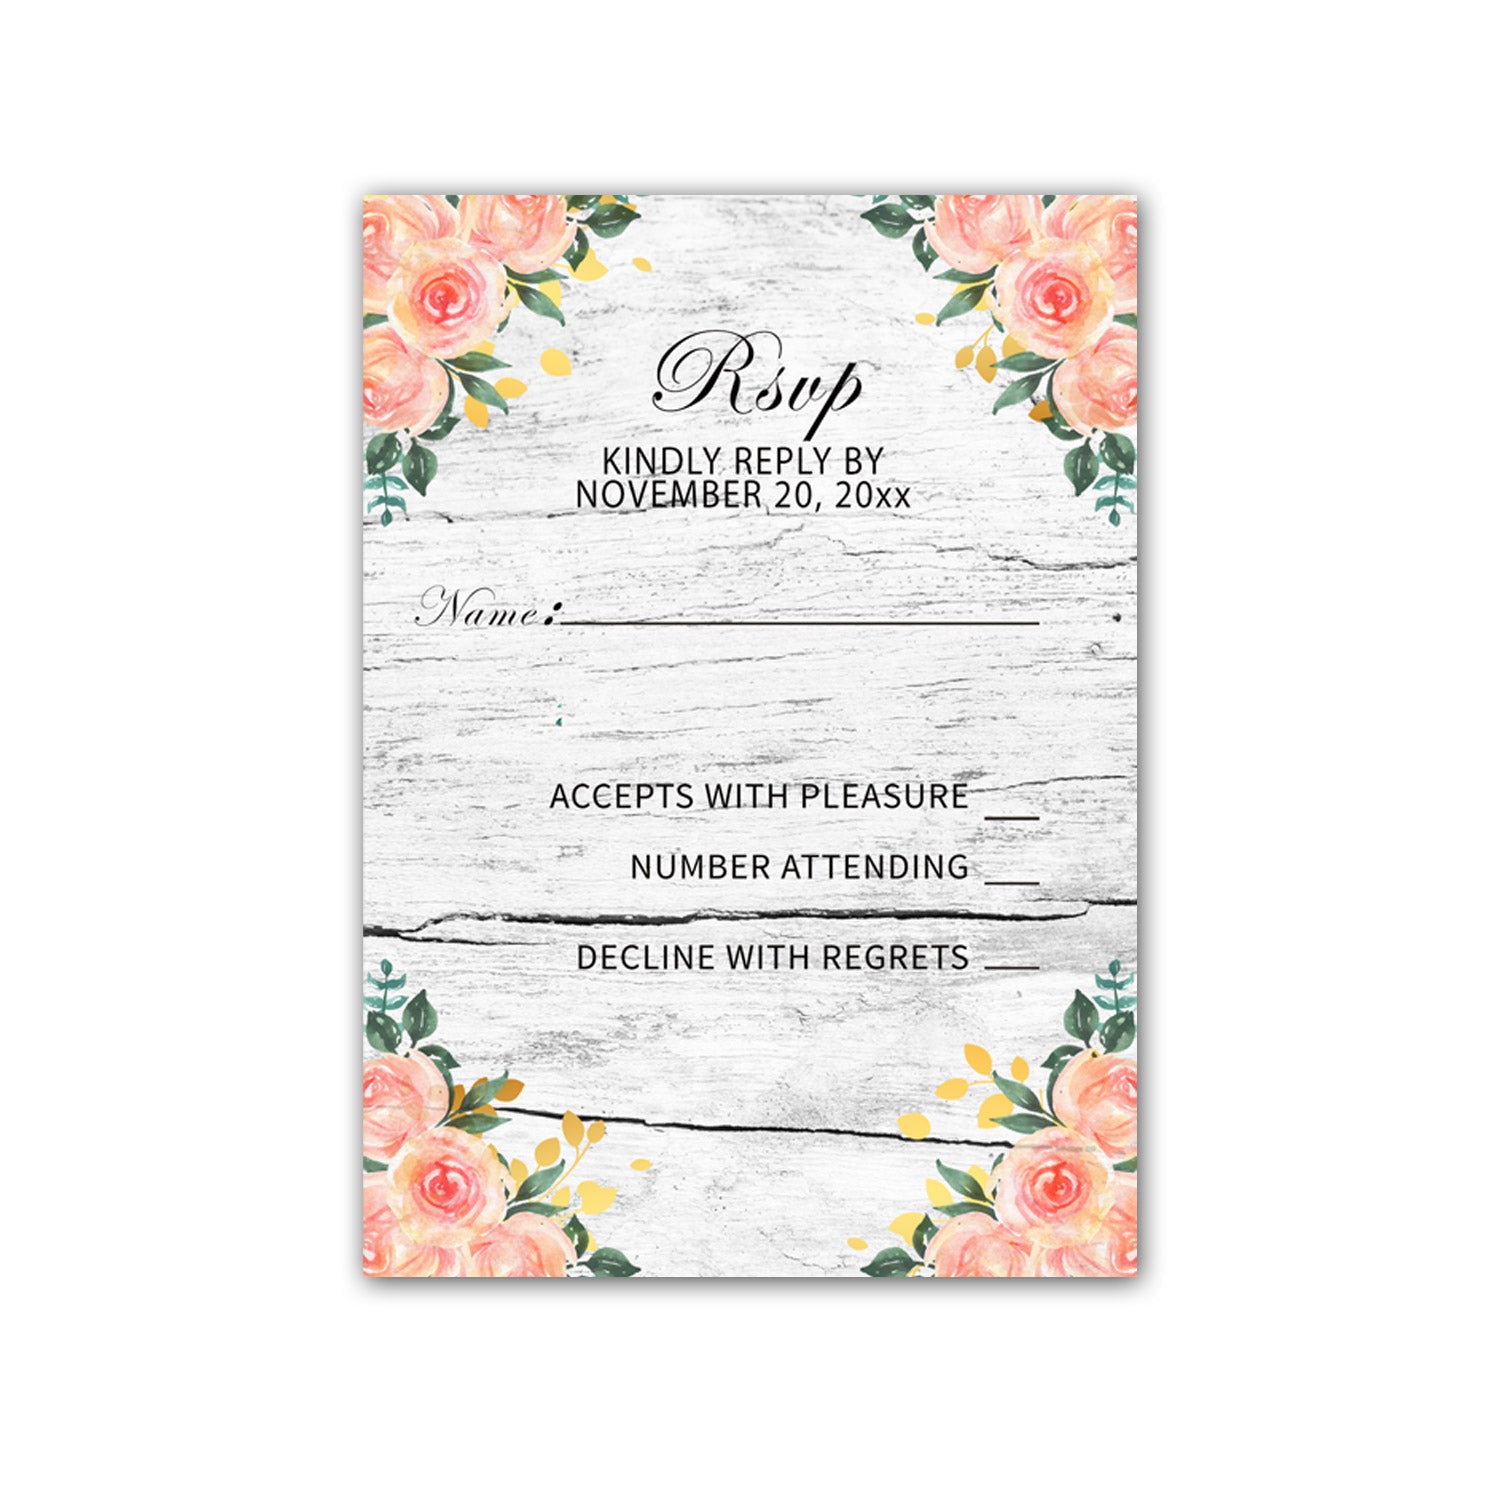 RSVP cards wood rustic wedding pink gold floral printable